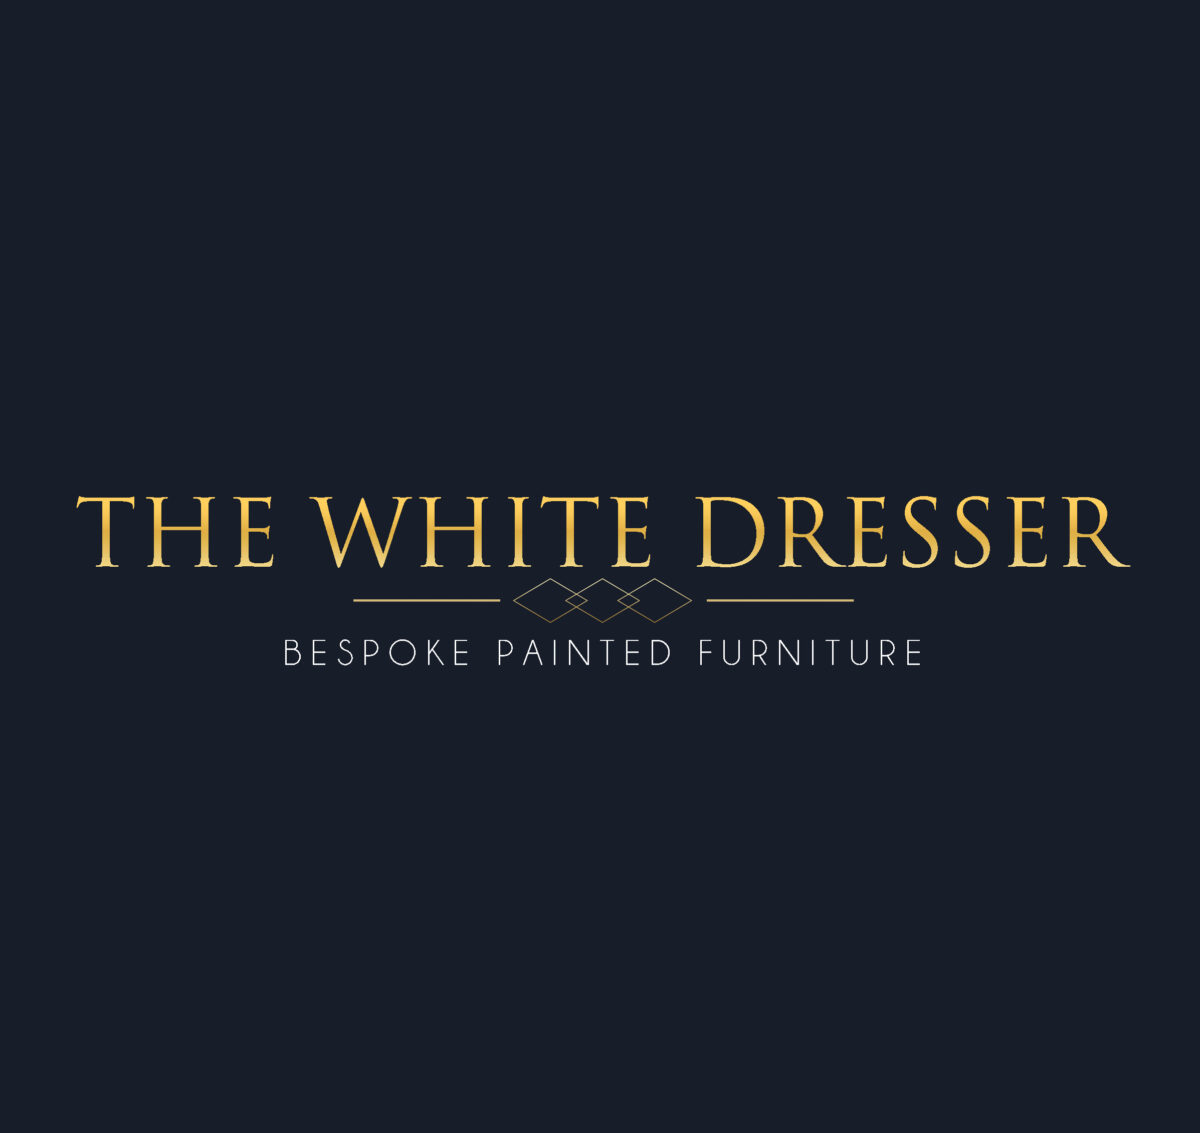 The White Dresser